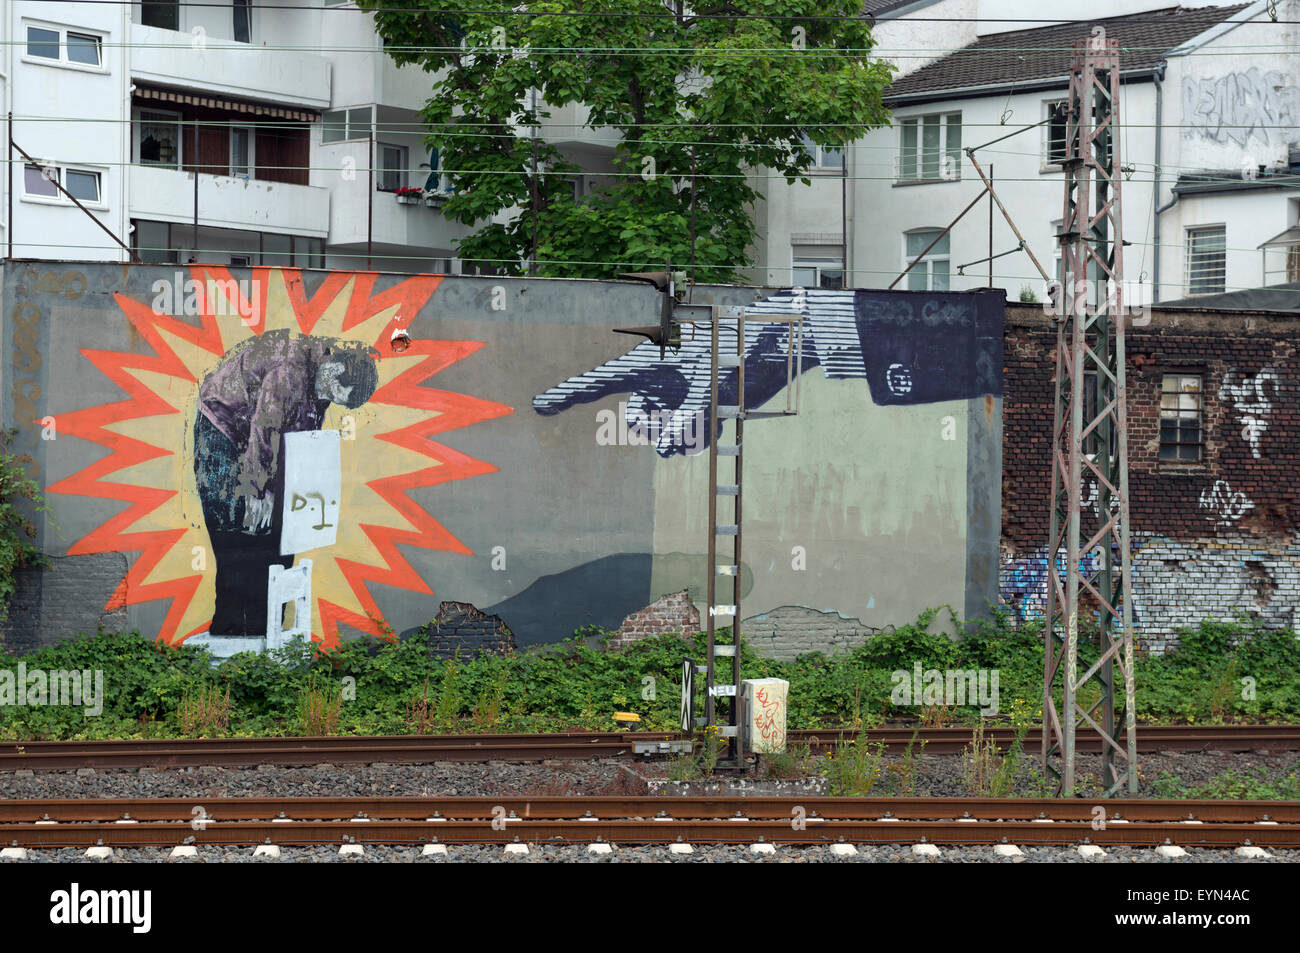 Railway graffiti, Wehrhahn, Dusseldorf, North Rhine-Westphalia, Germany. Stock Photo